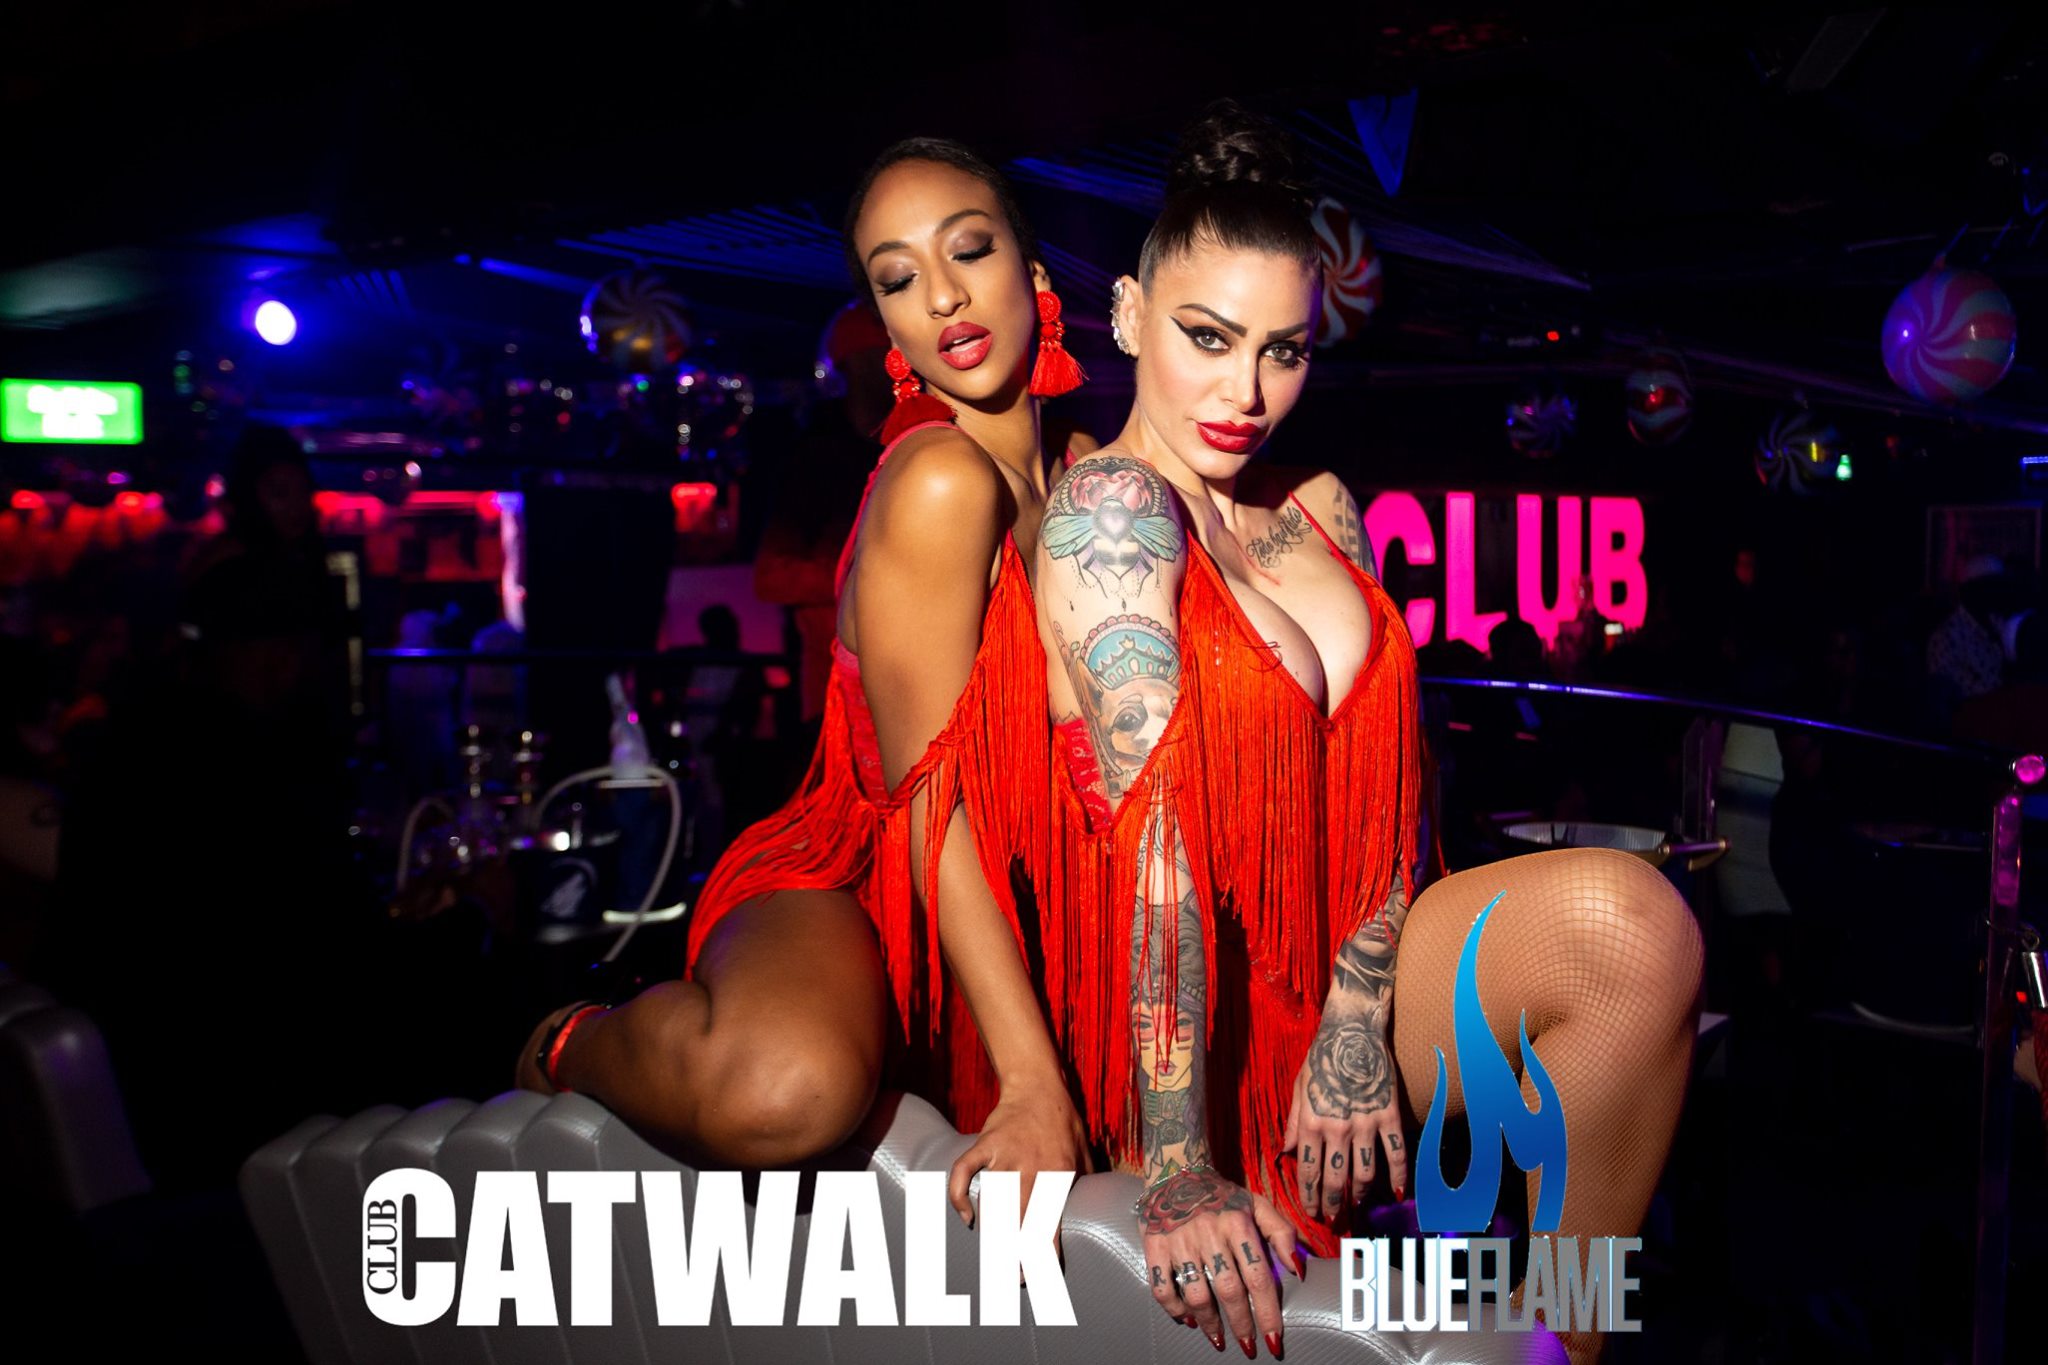 Catwalk party Tuesday Super disco